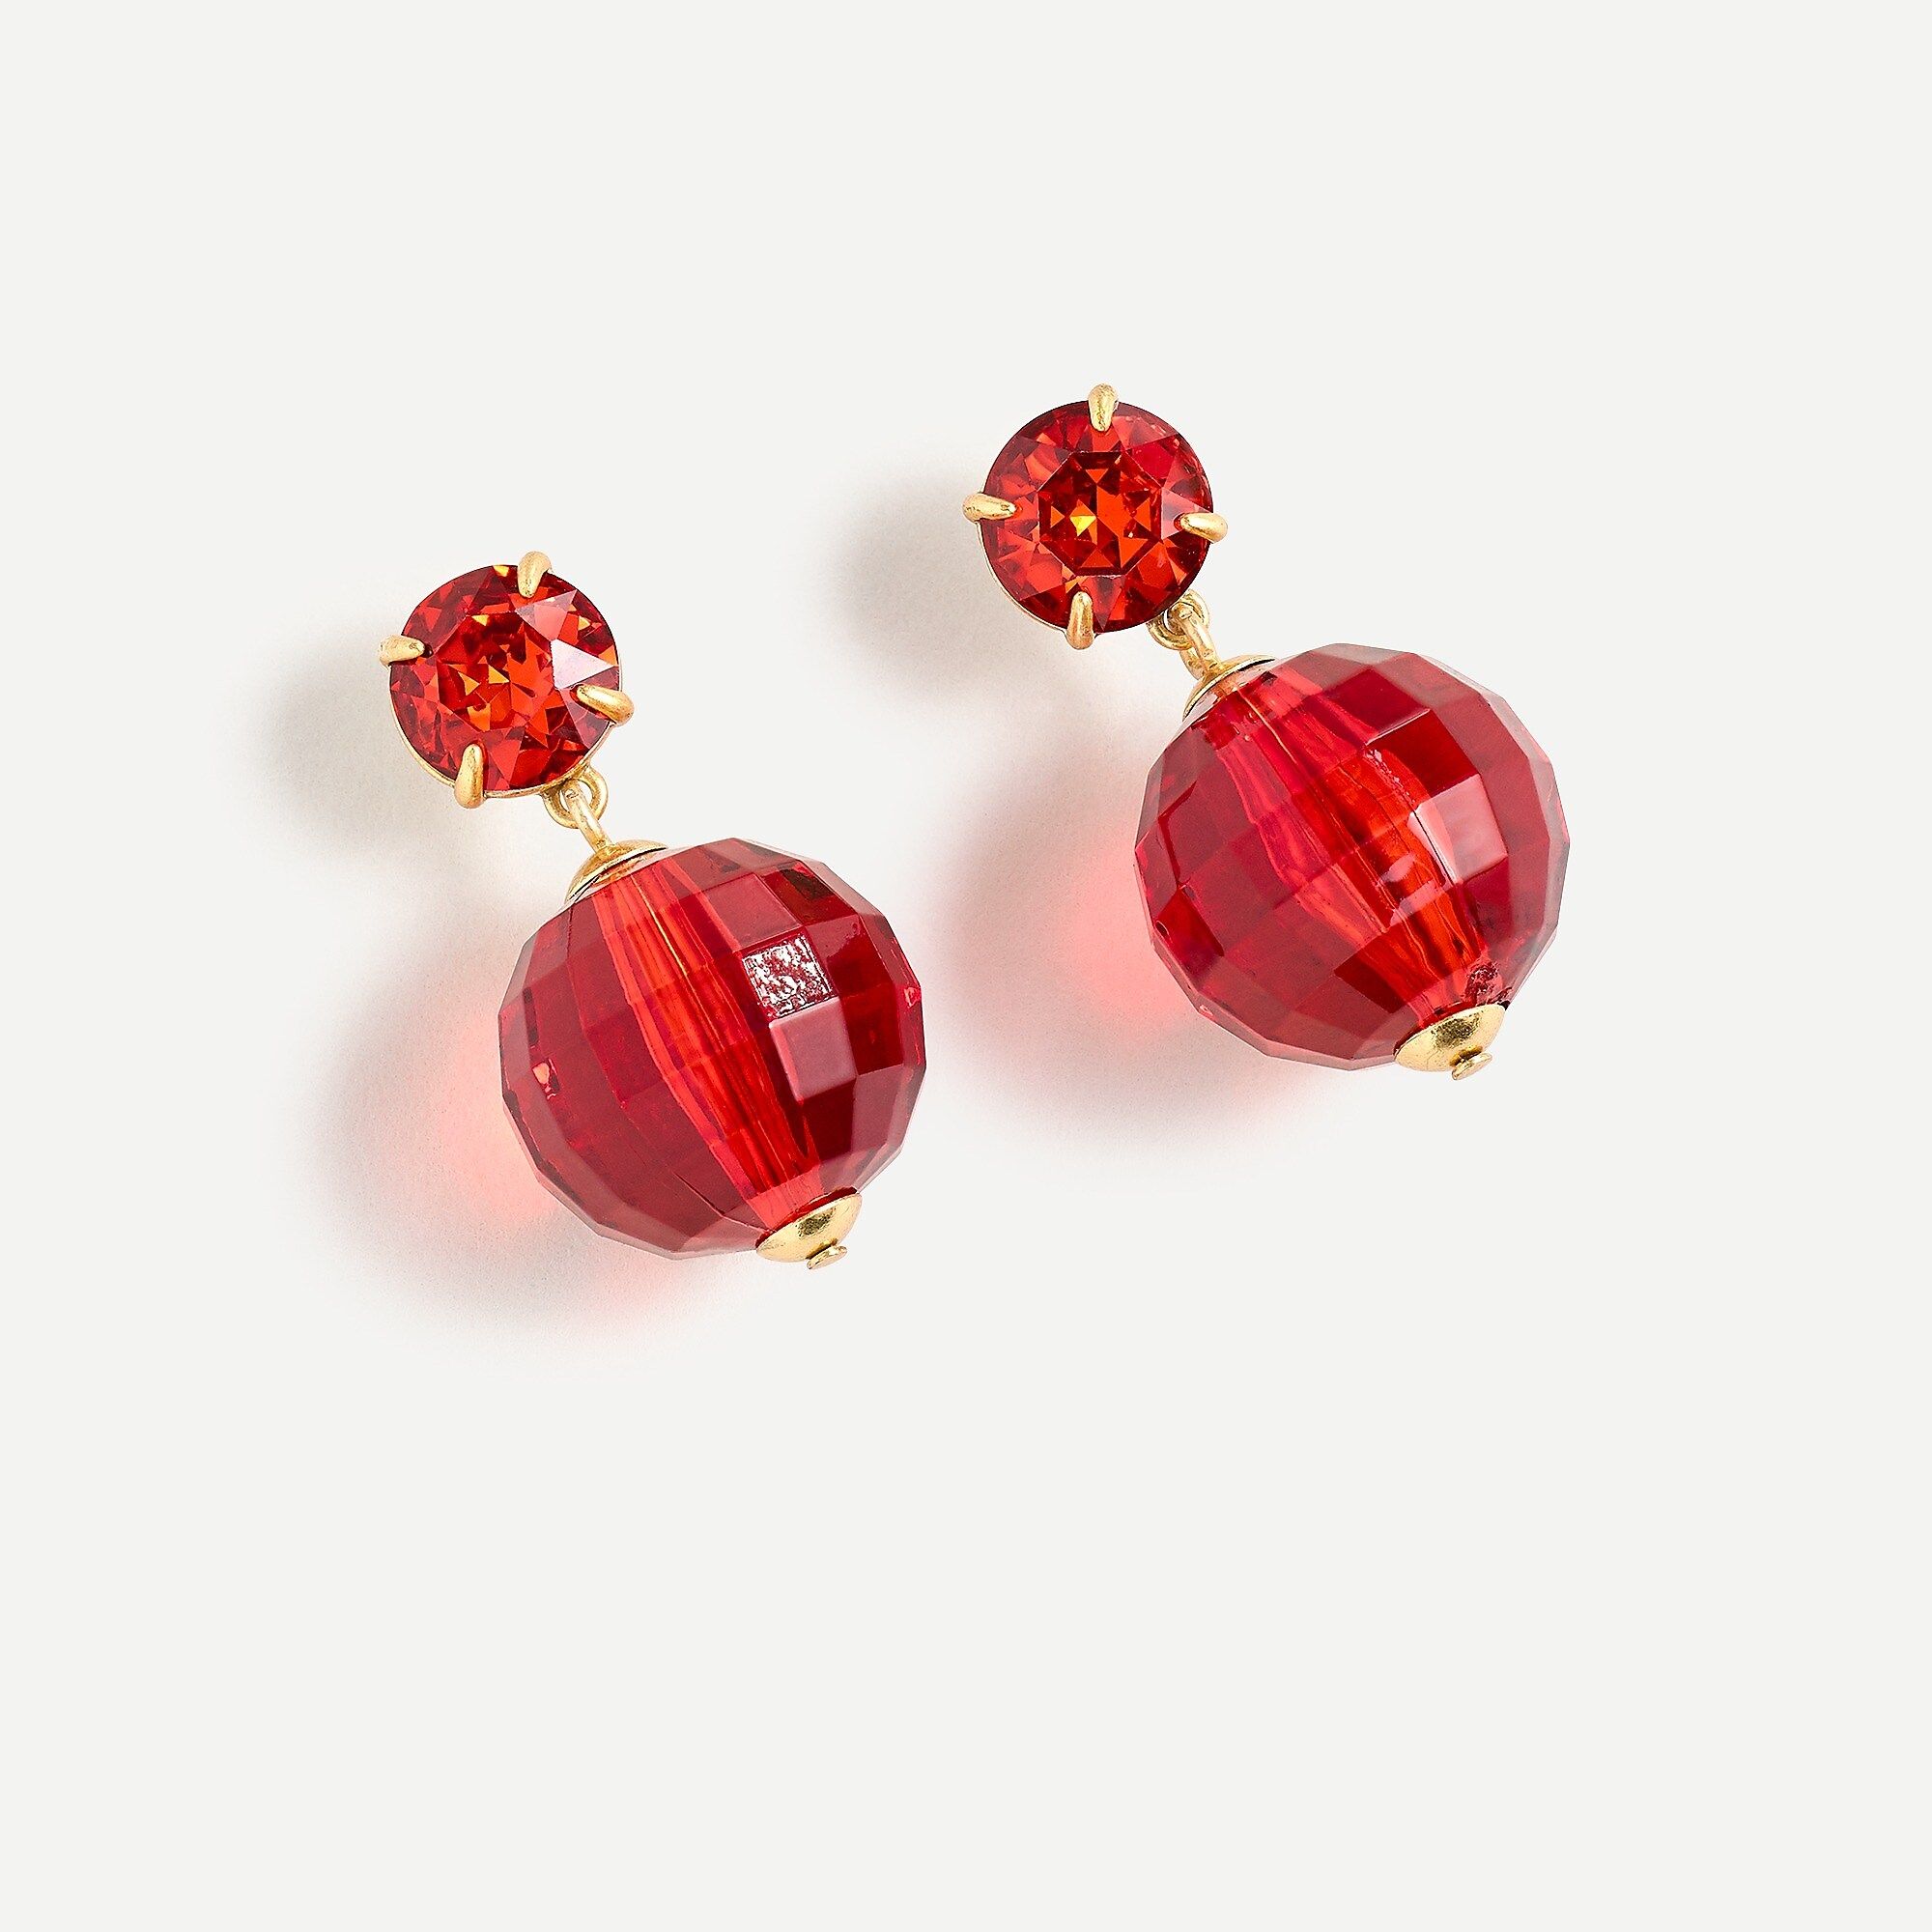 Disco ball drop earrings | J.Crew US